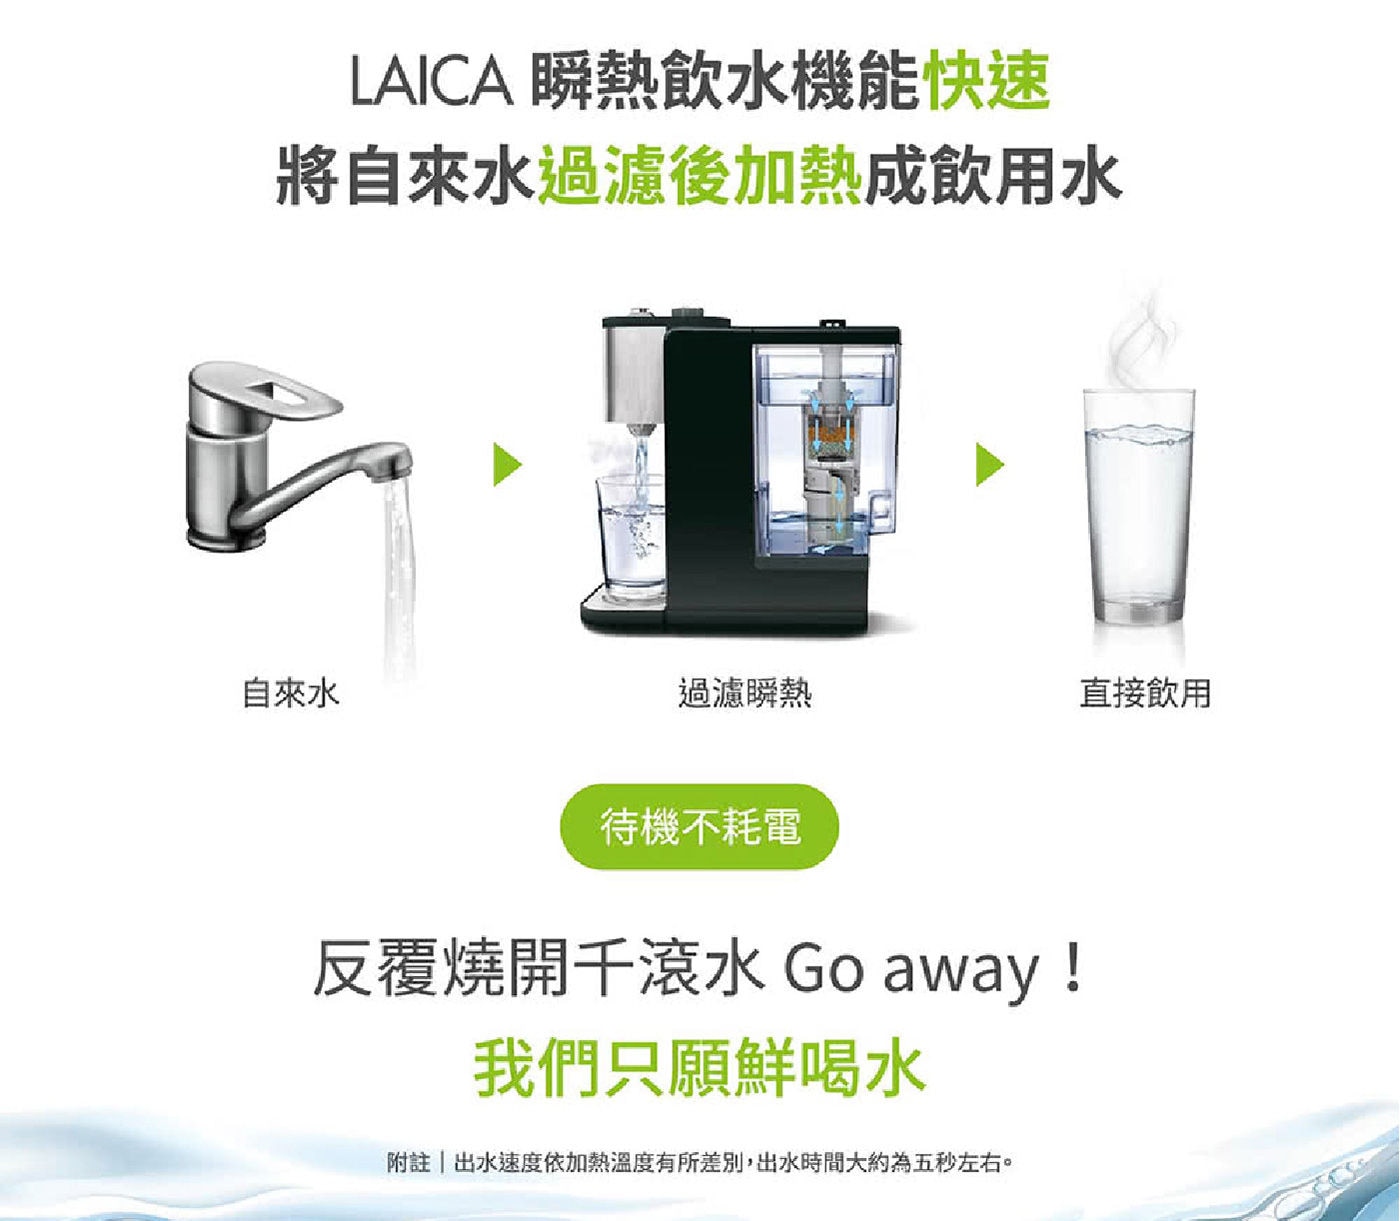 LAICA 全域溫控瞬熱飲水機 待機不耗電